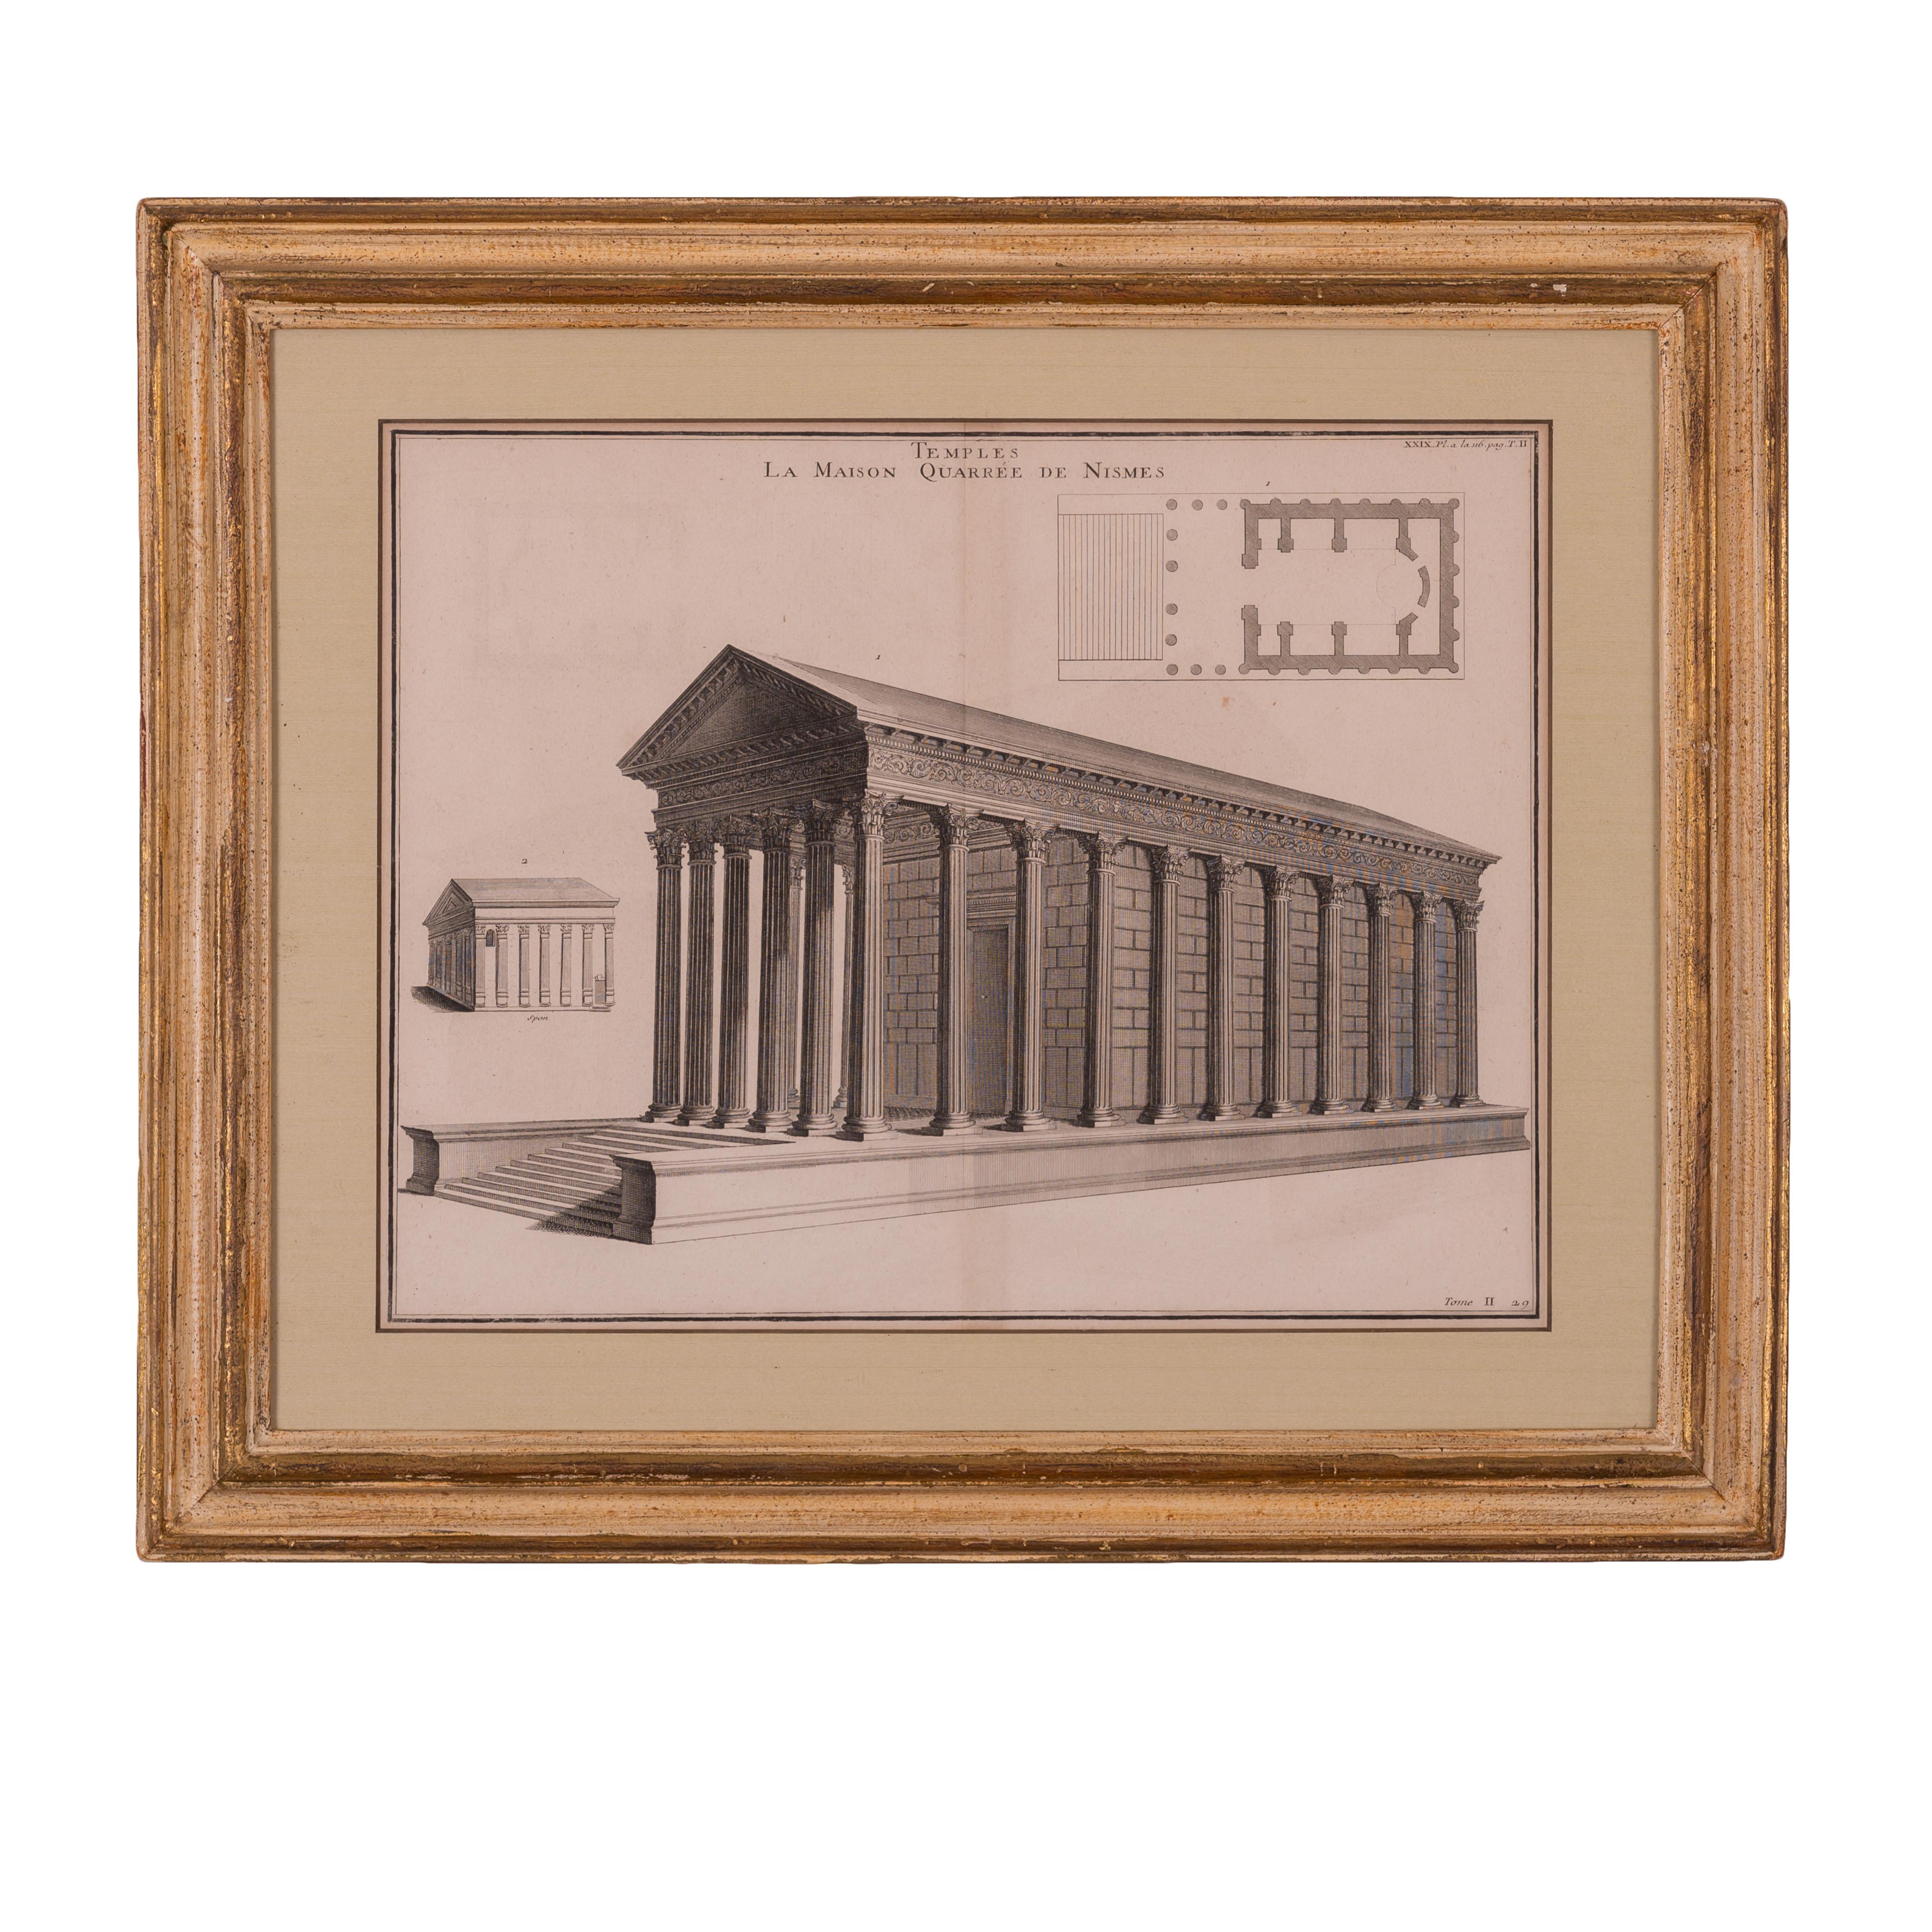 Bernard de Montfaucon 
(Französisch, 1655-1741)

Dieses Kupferstichpaar, das römische Tempel (darunter den Tempel in Nimes, Frankreich, oder das Maison Carree) darstellt, stammt aus Montfaucons L'antiquité expliquée et représentée en figures, das